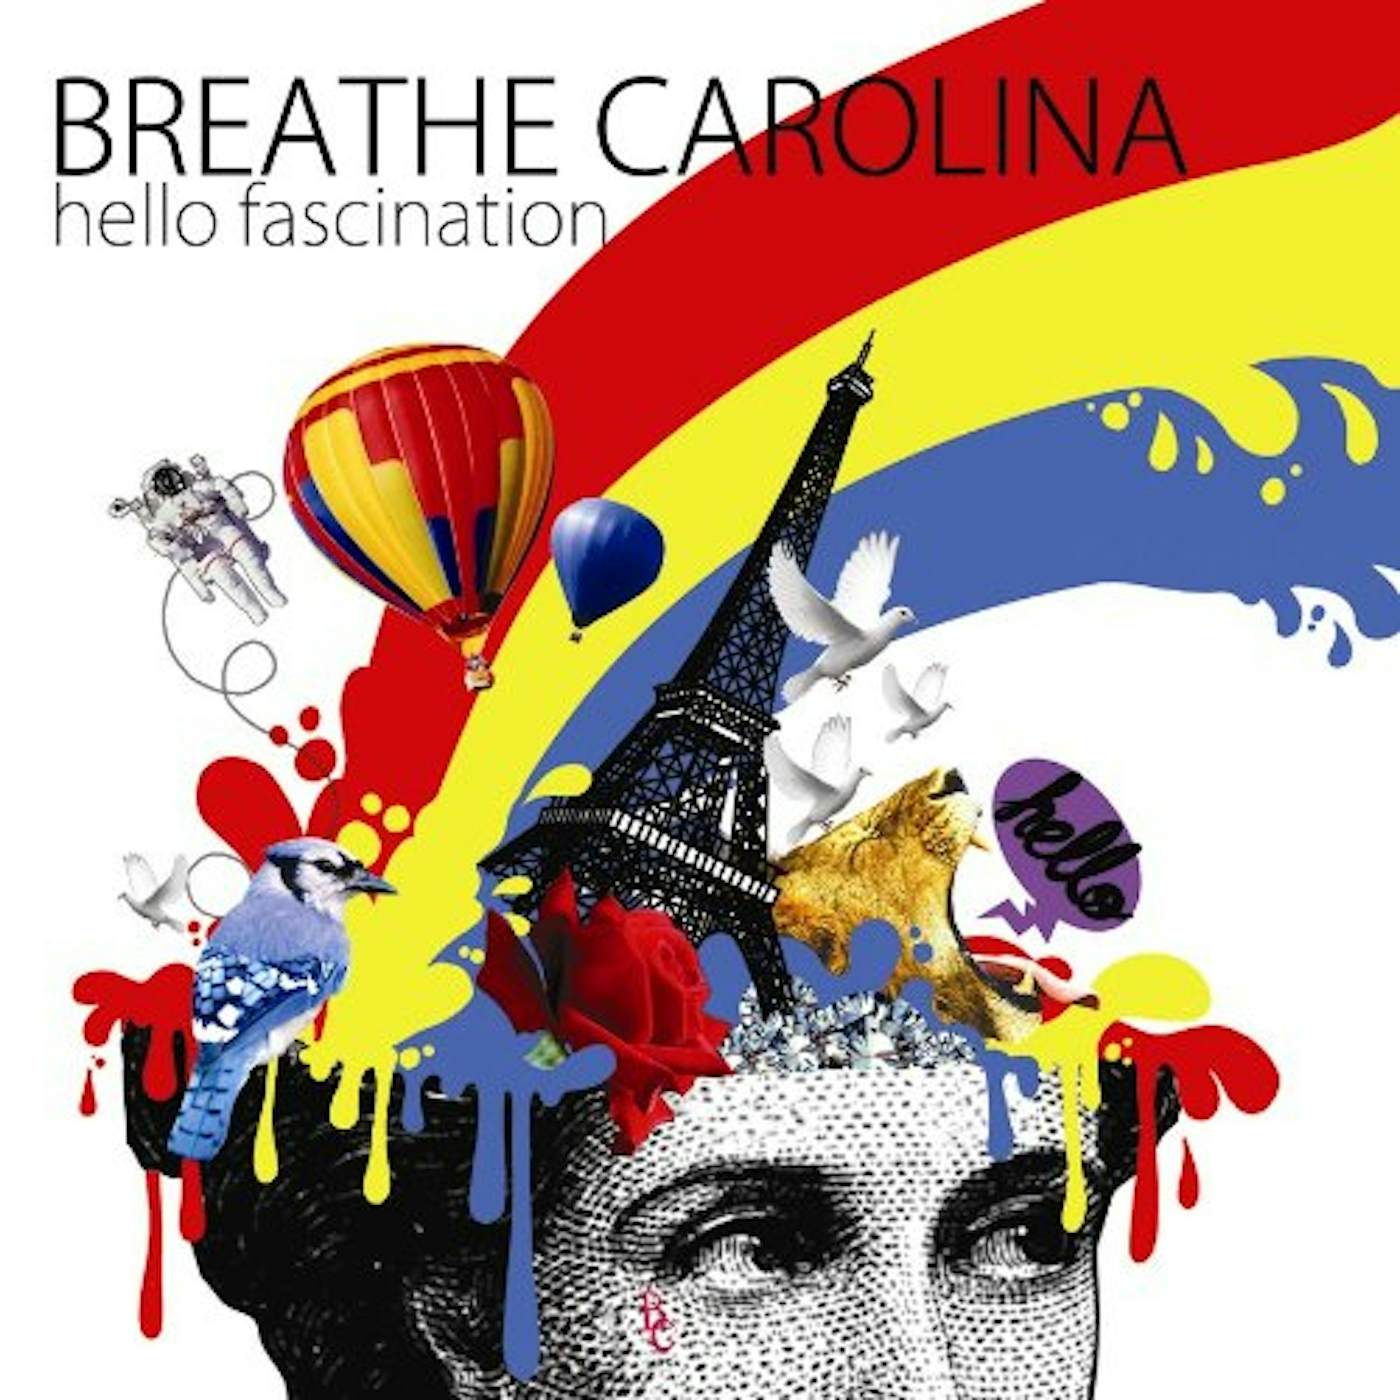 Breathe Carolina HELLO FASCINATION CD